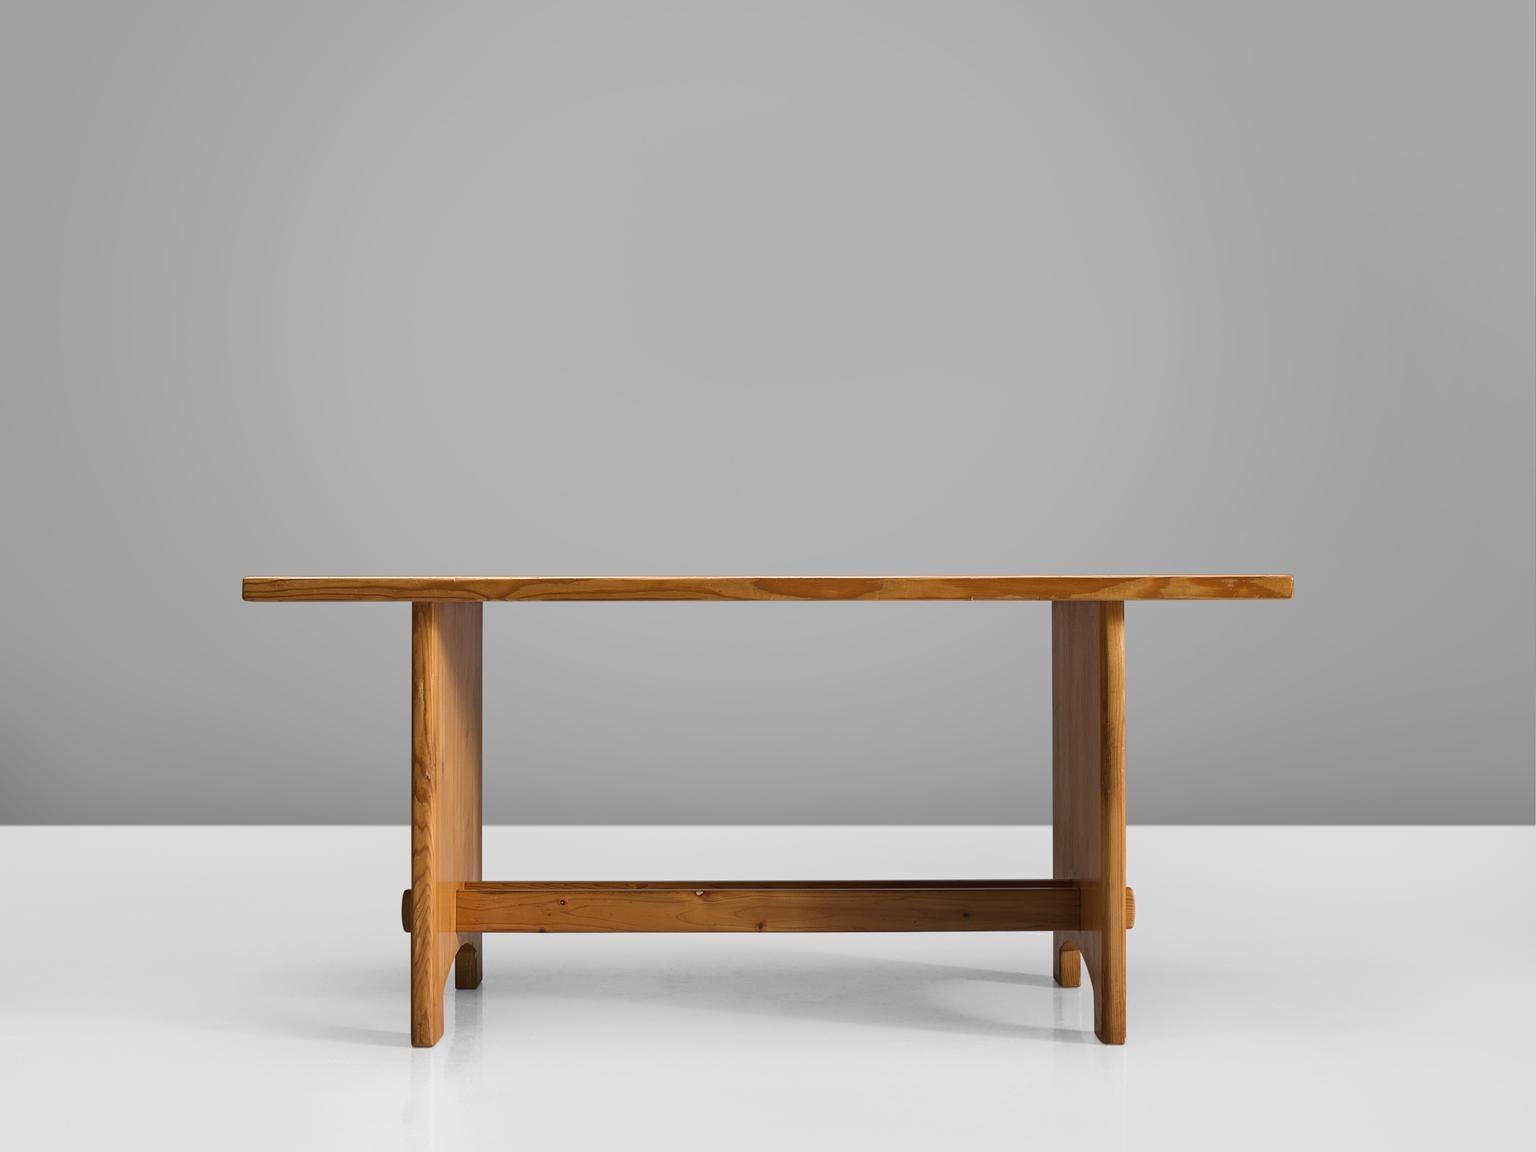 Scandinavian Modern Jacob Kielland-Brandt Dining Table in Solid Pine